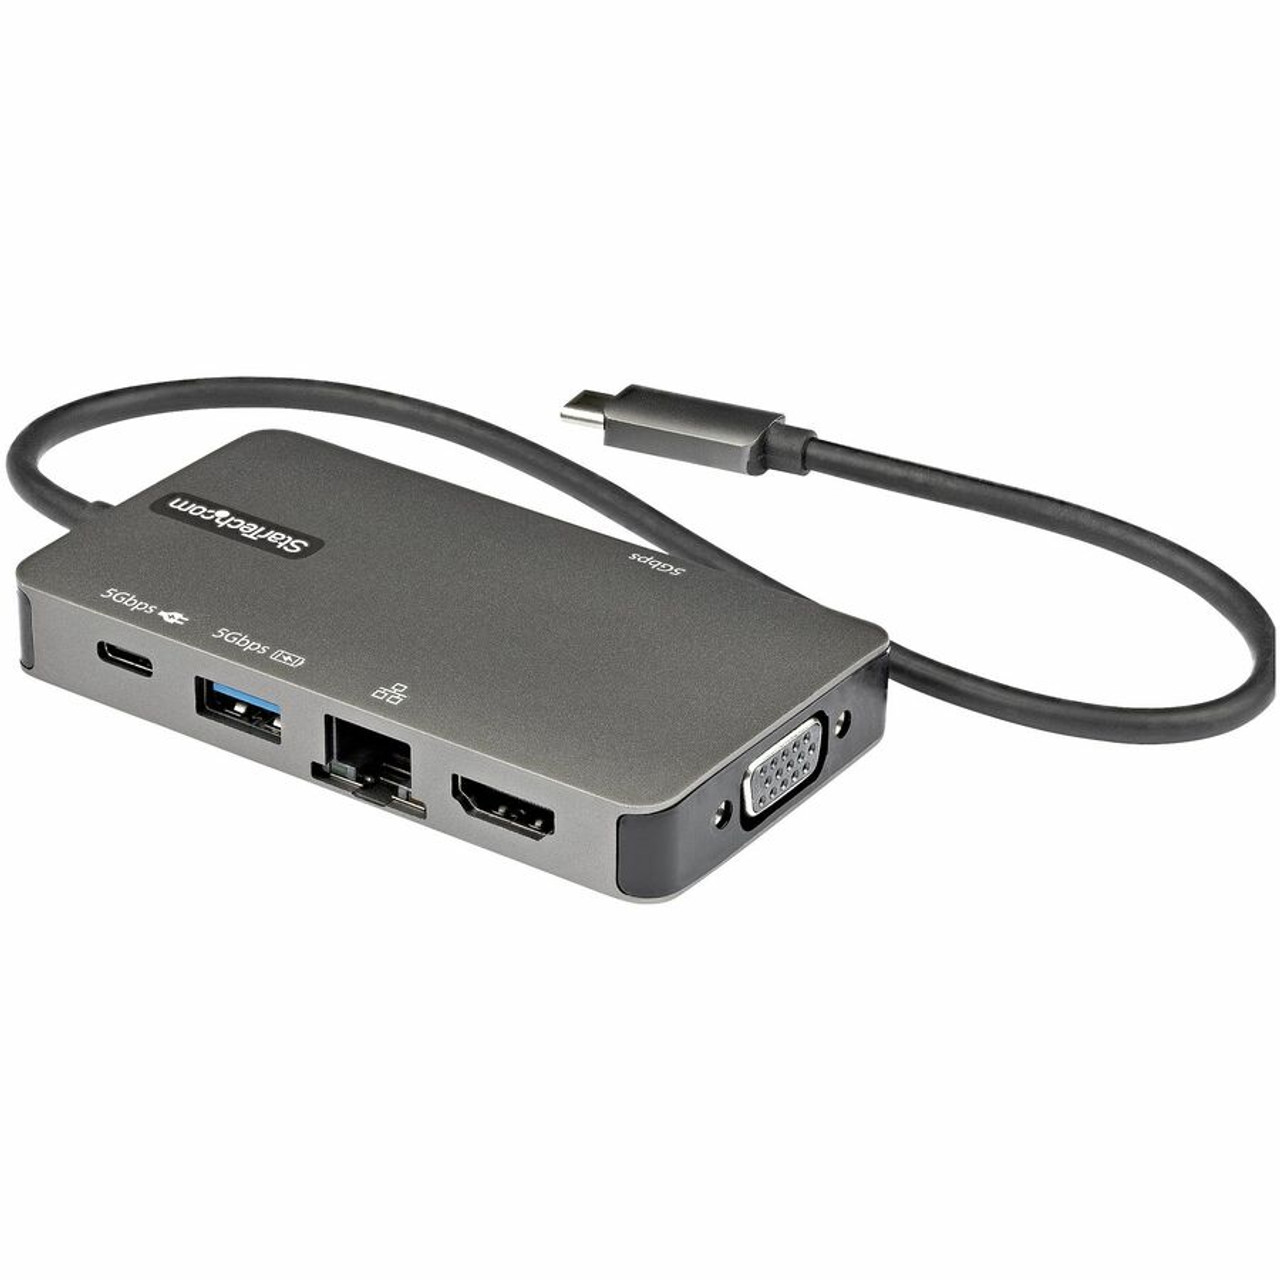 Hub USB-C, multiport, 8 ports, 3 USB-A, 2 USB-C, VGA, HDMI™, LAN